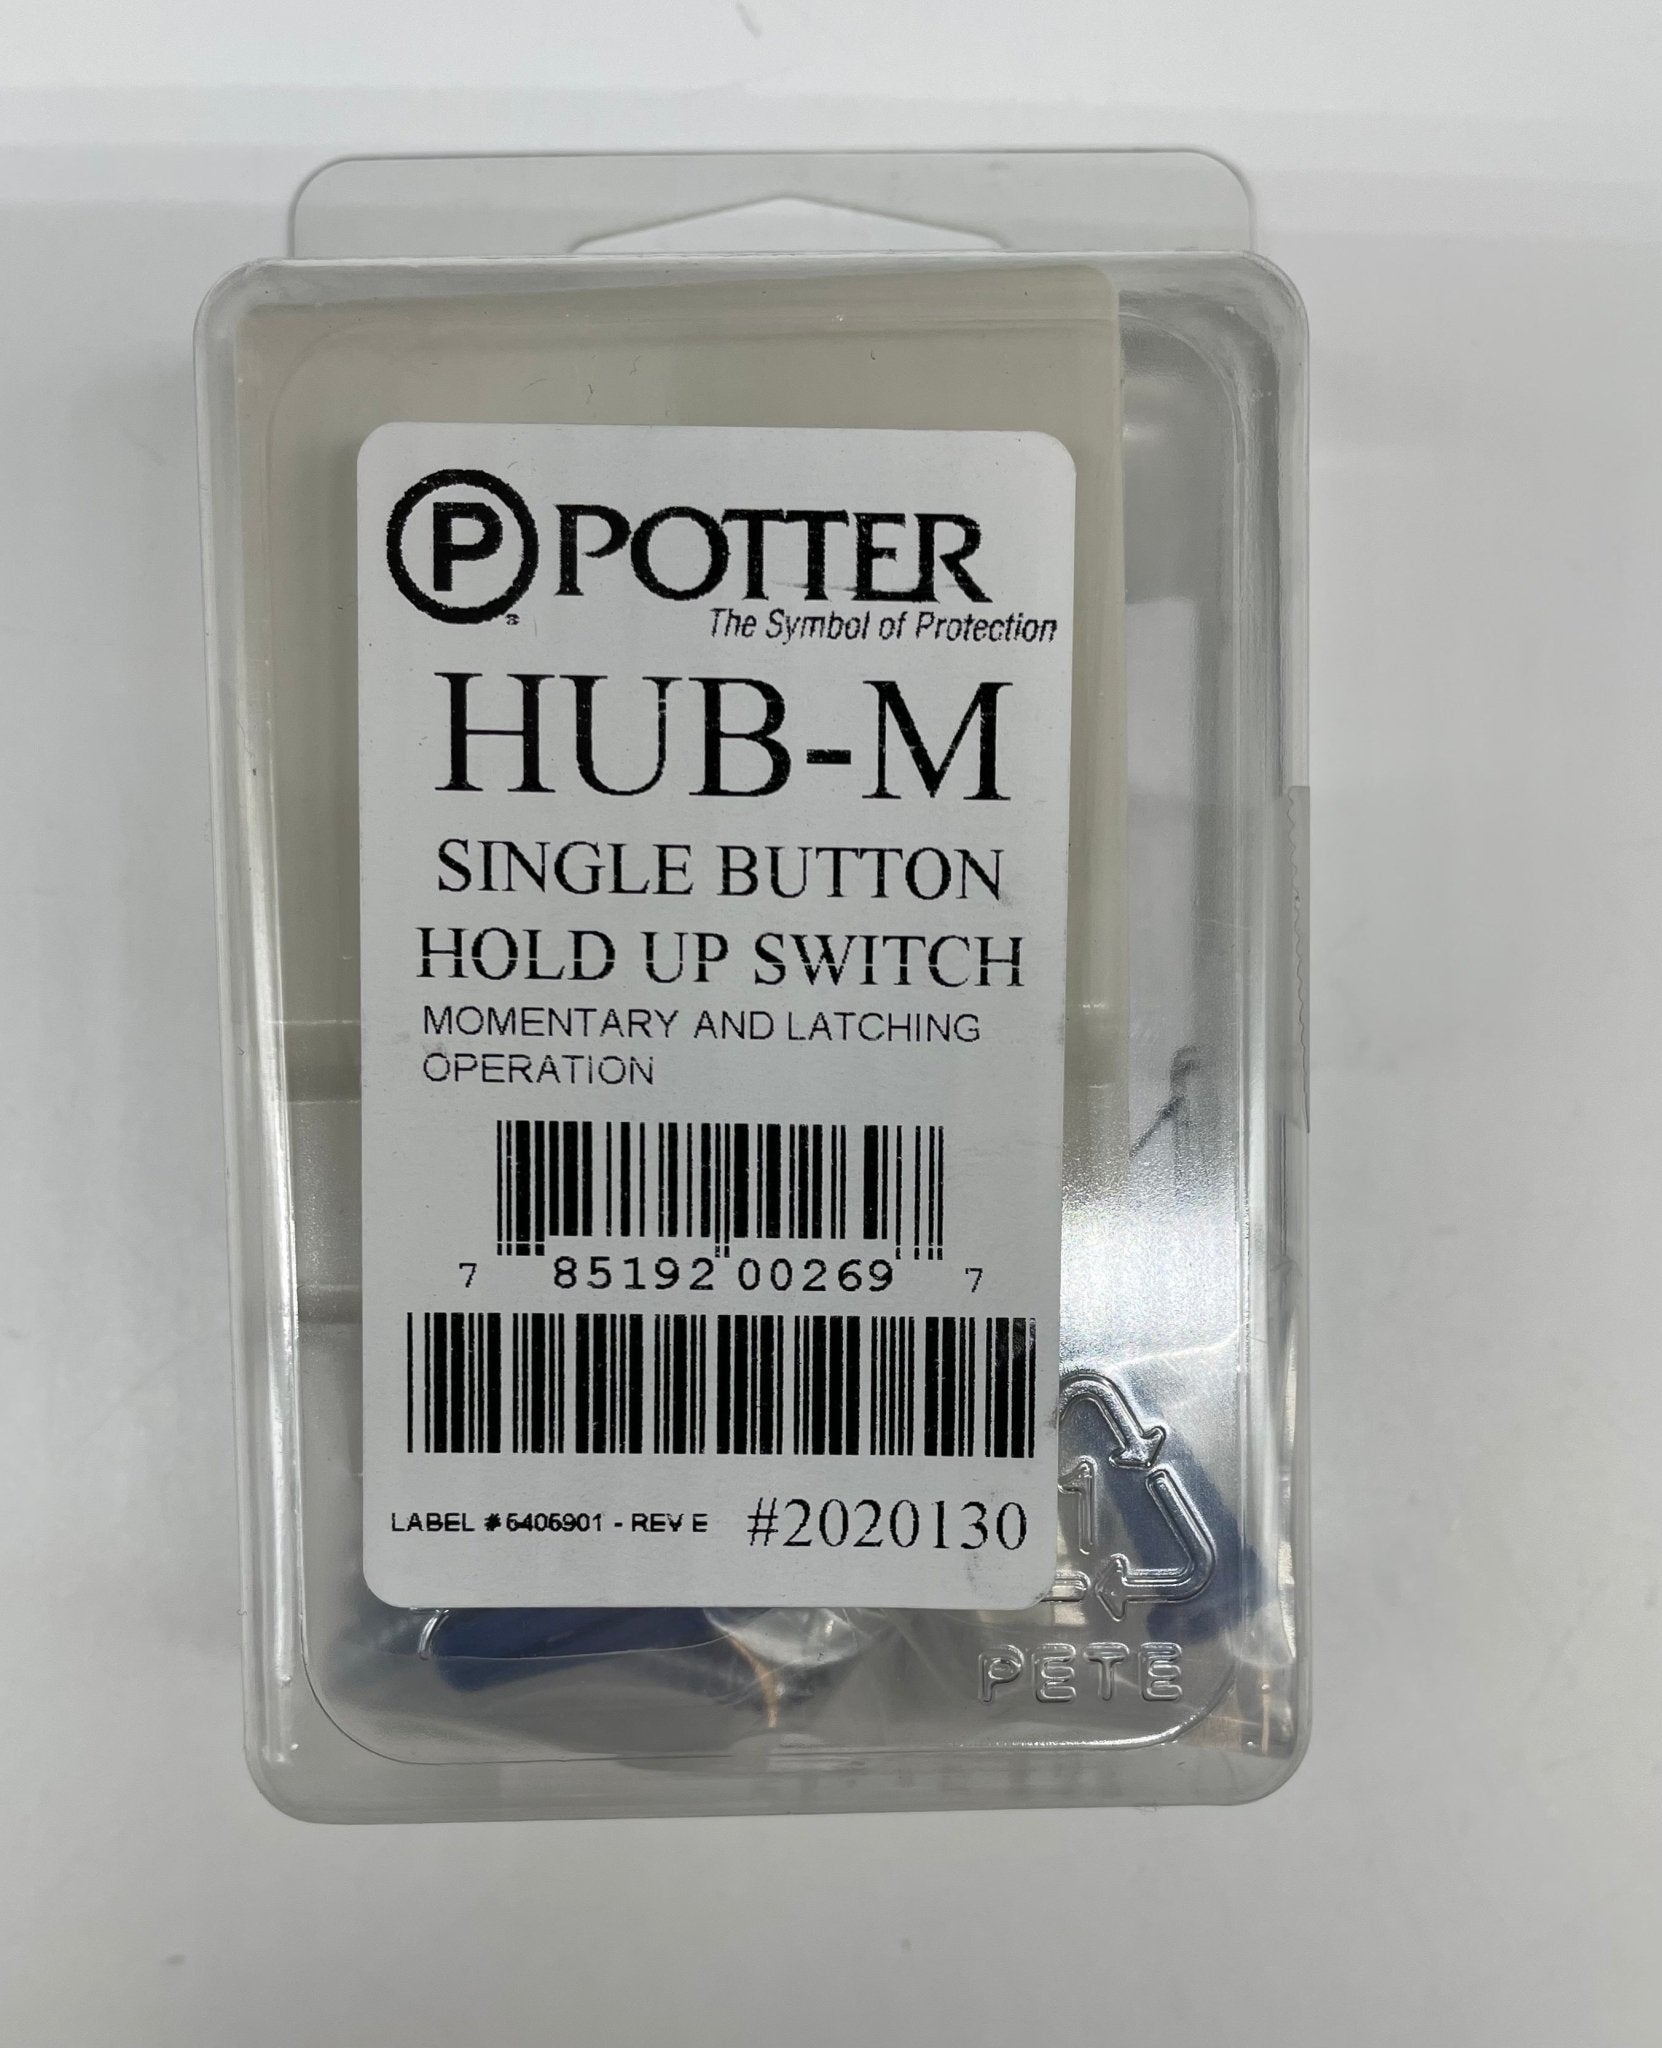 Potter HUB-M - The Fire Alarm Supplier